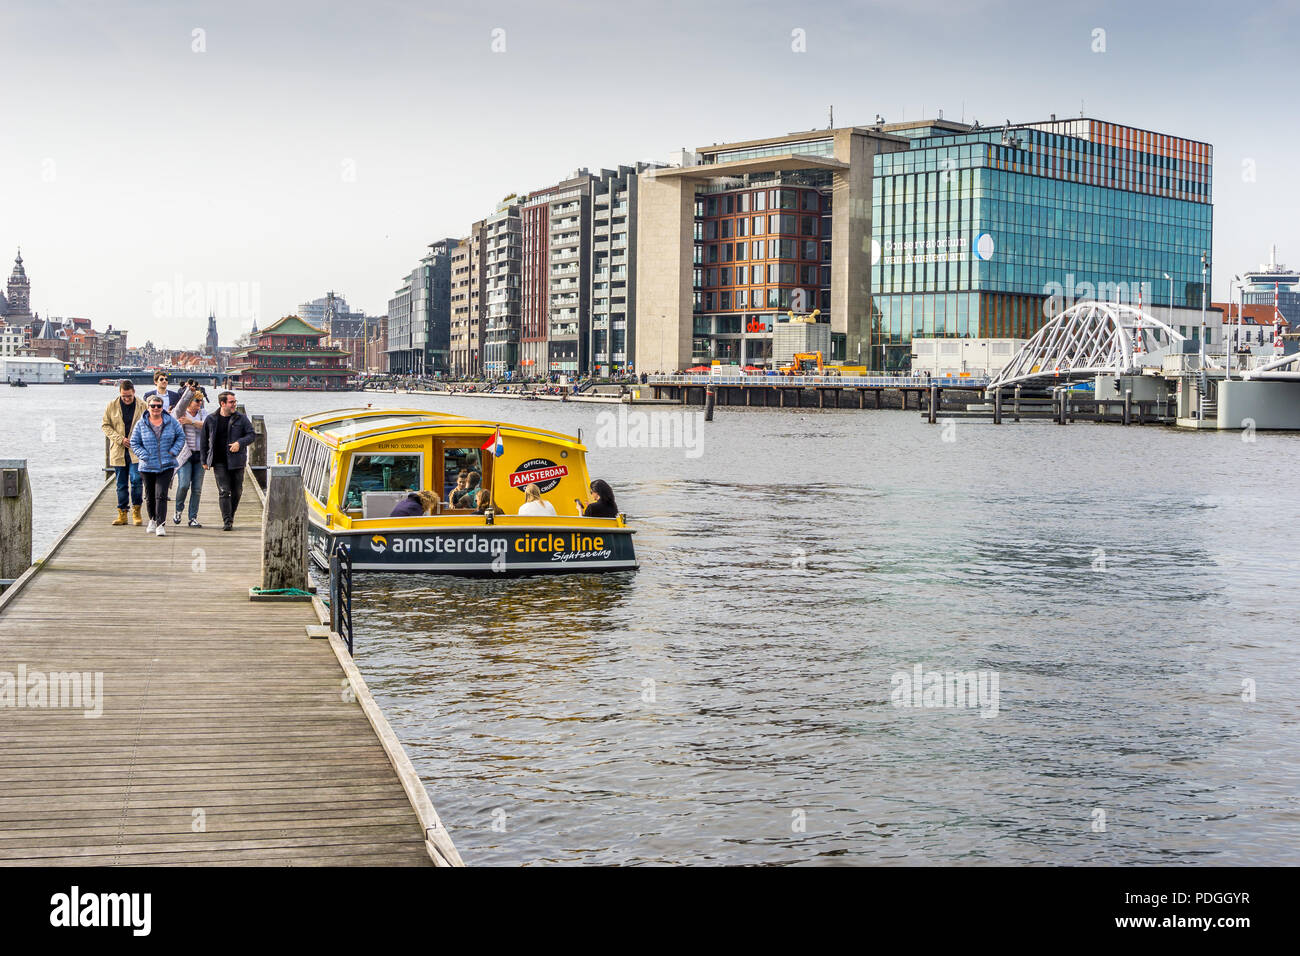 Transport bateau Circle line, open havenfront, oosterdok , Amsterdam, Pays-Bas, Europe. Banque D'Images